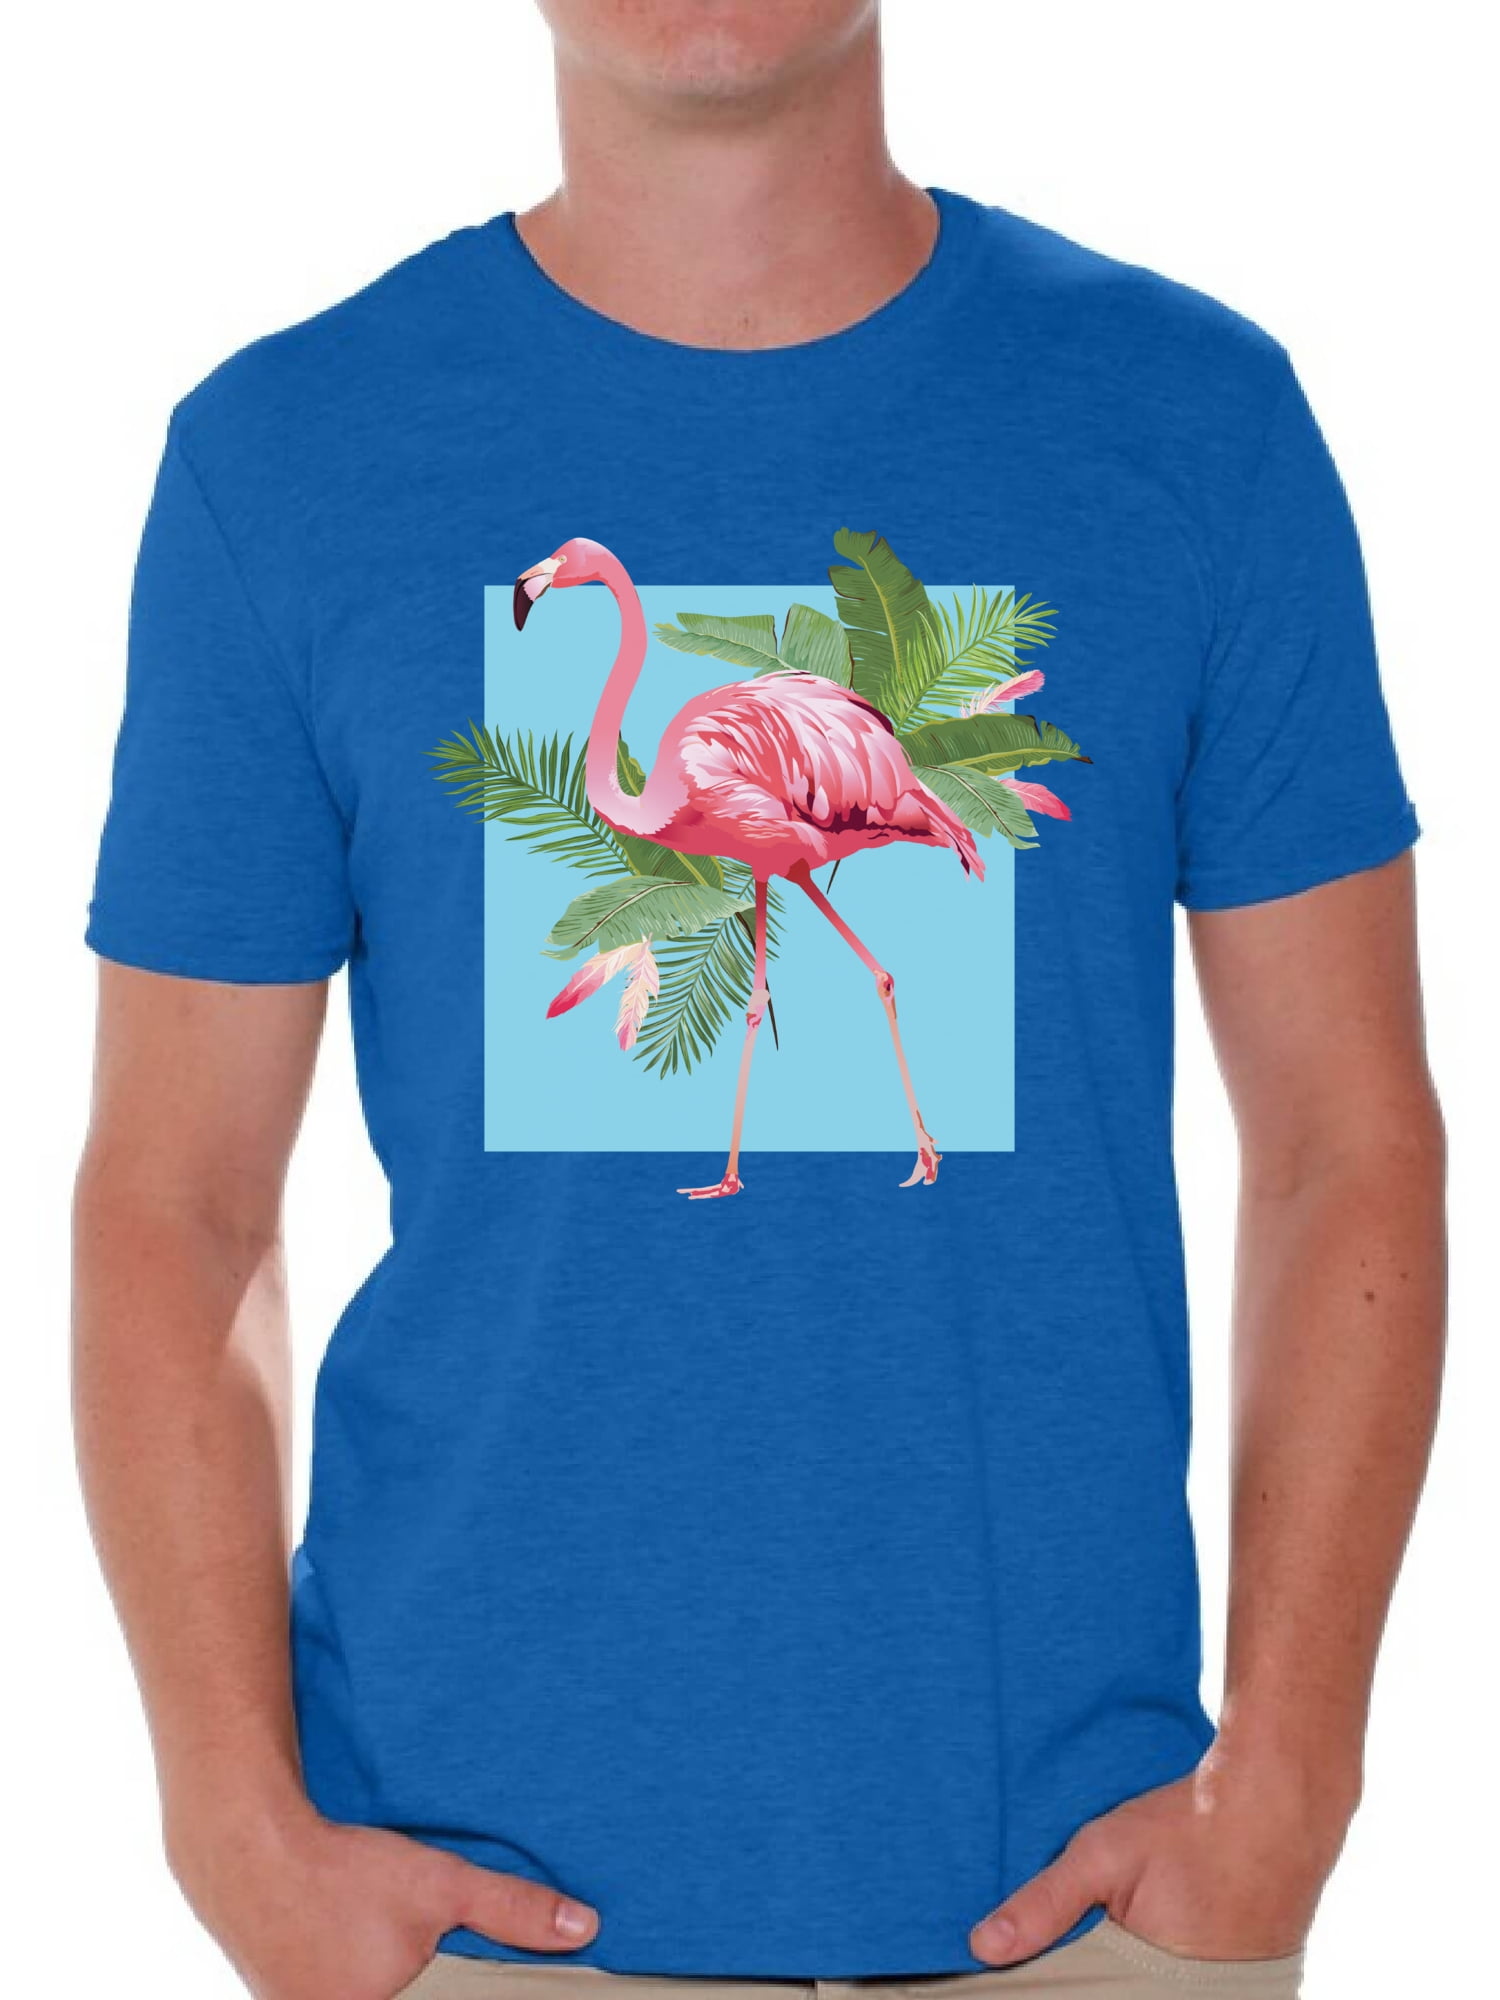 Awkward Styles - Awkward Styles Punk Flamingo Tshirt for Men Floral ...